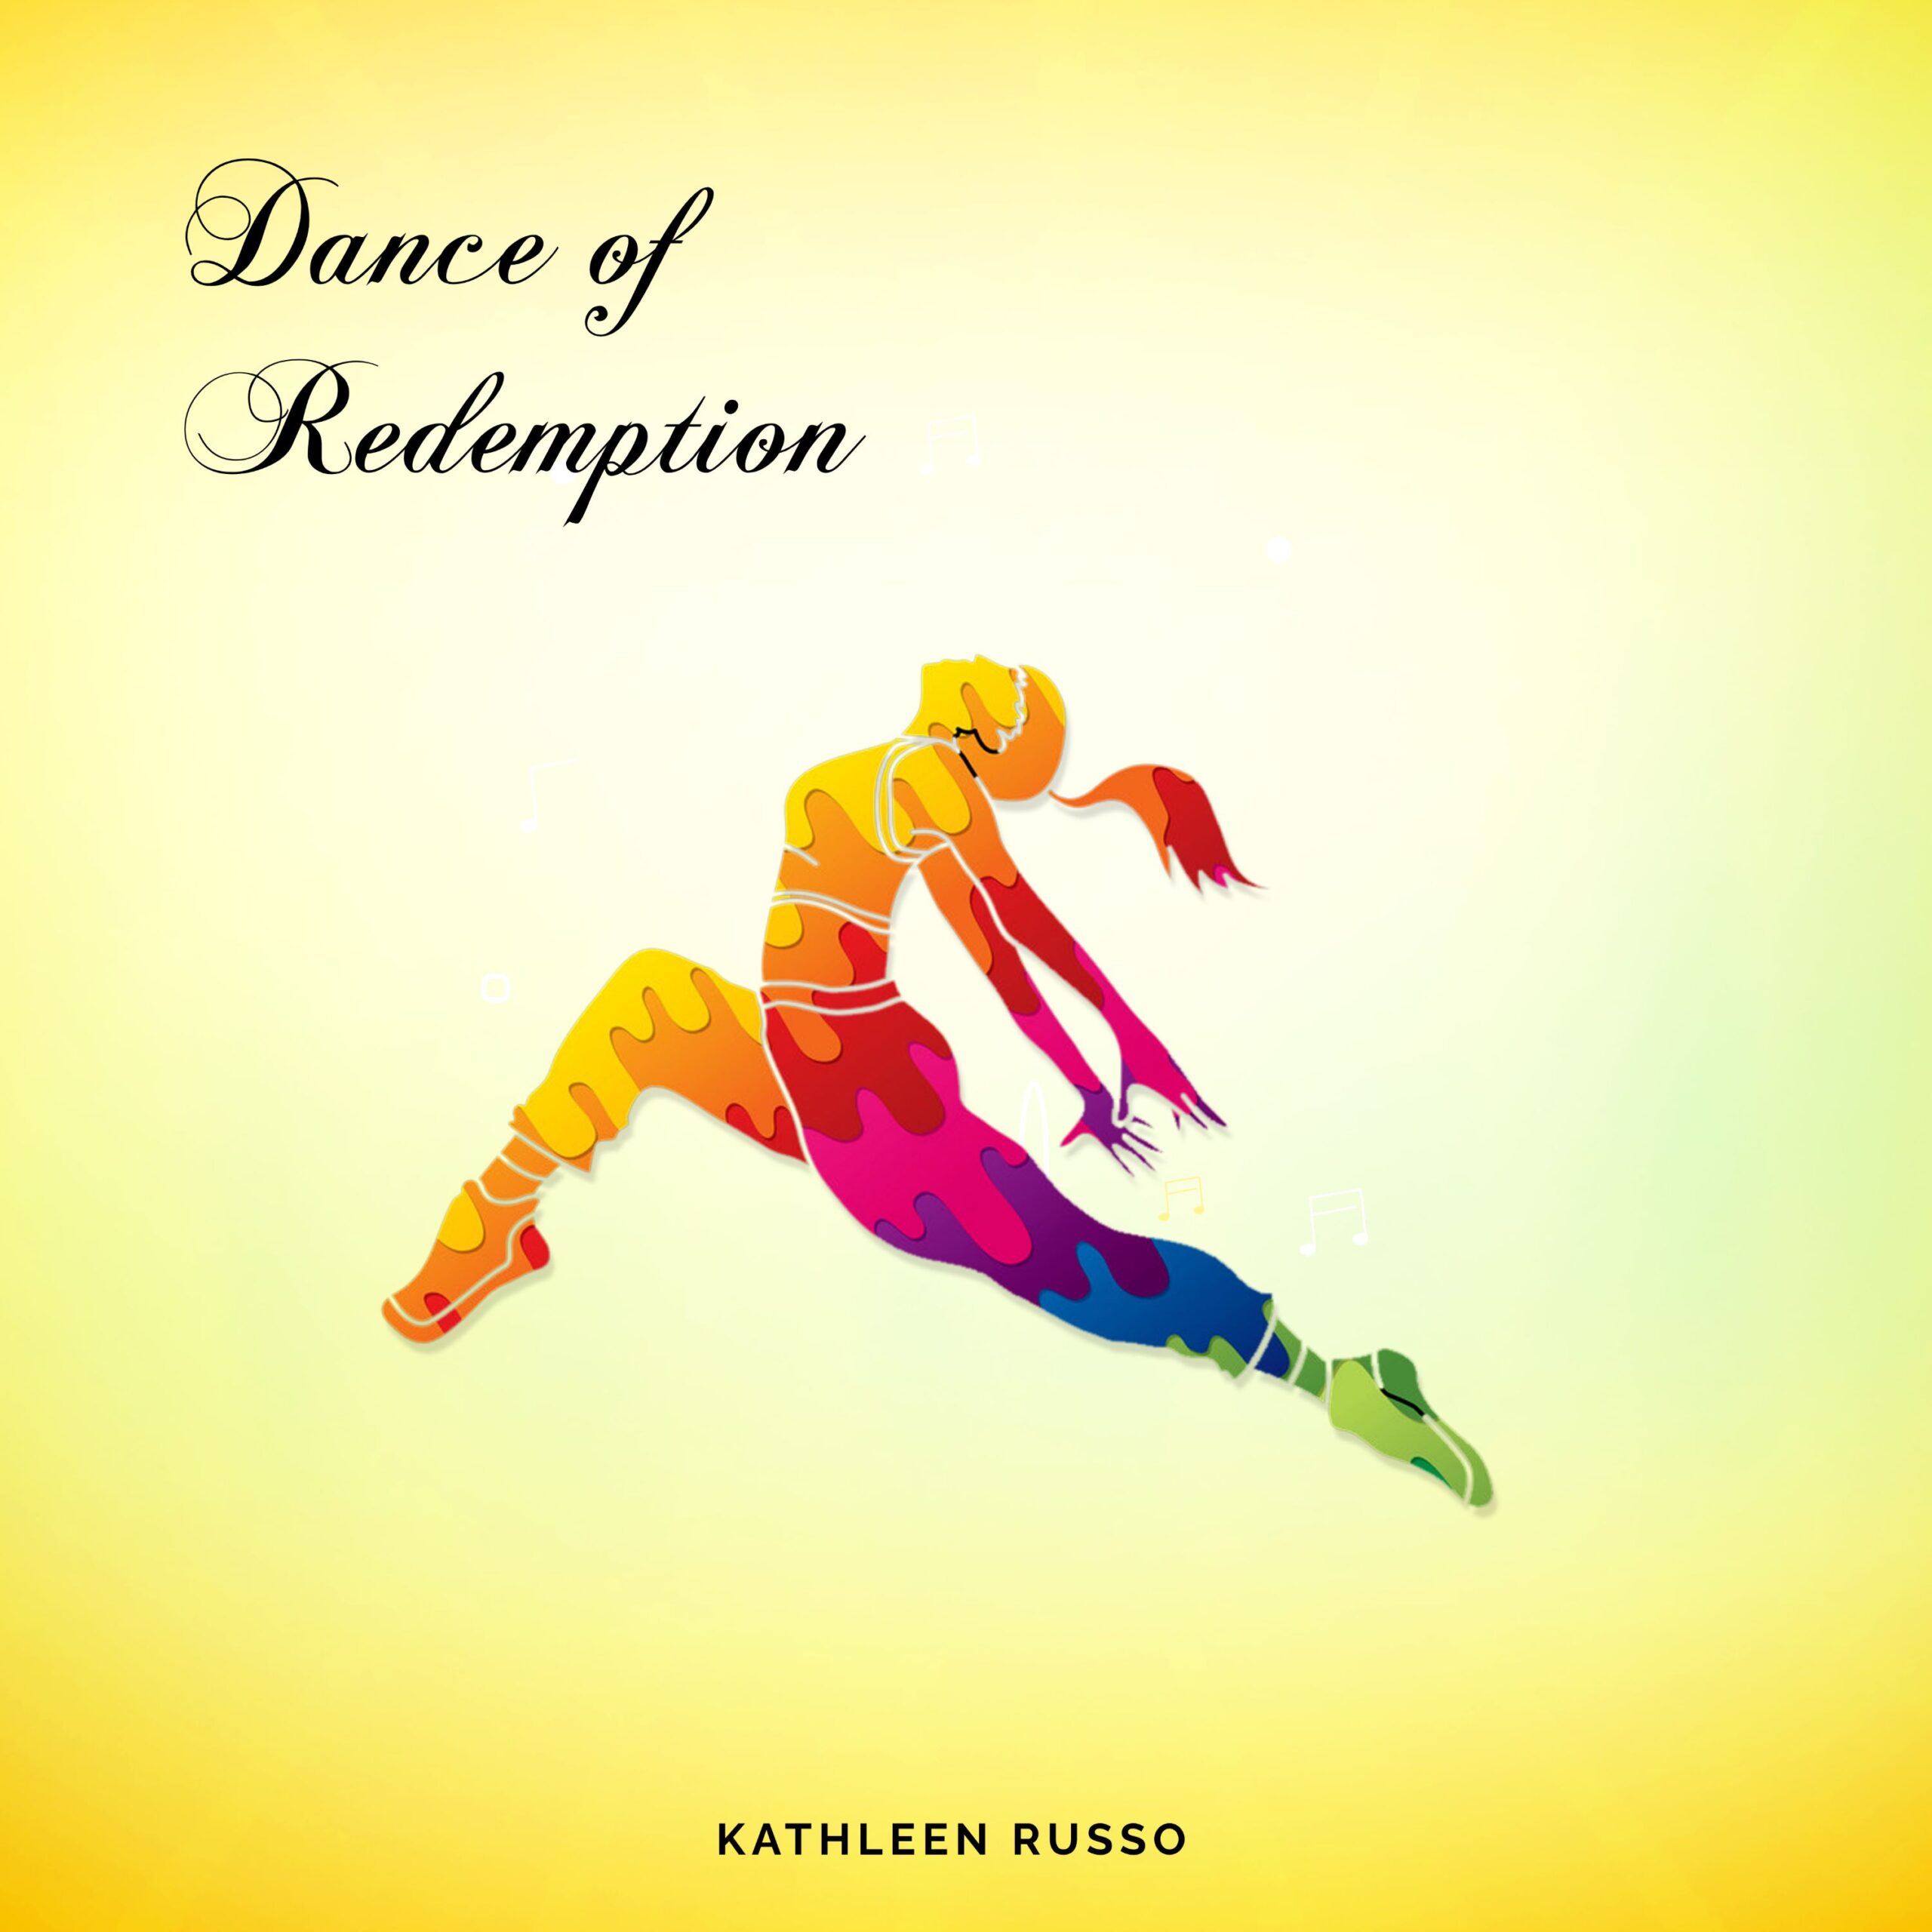 Kathleen Russo’s Triumphant Return: Exploring “Dance of Redemption”